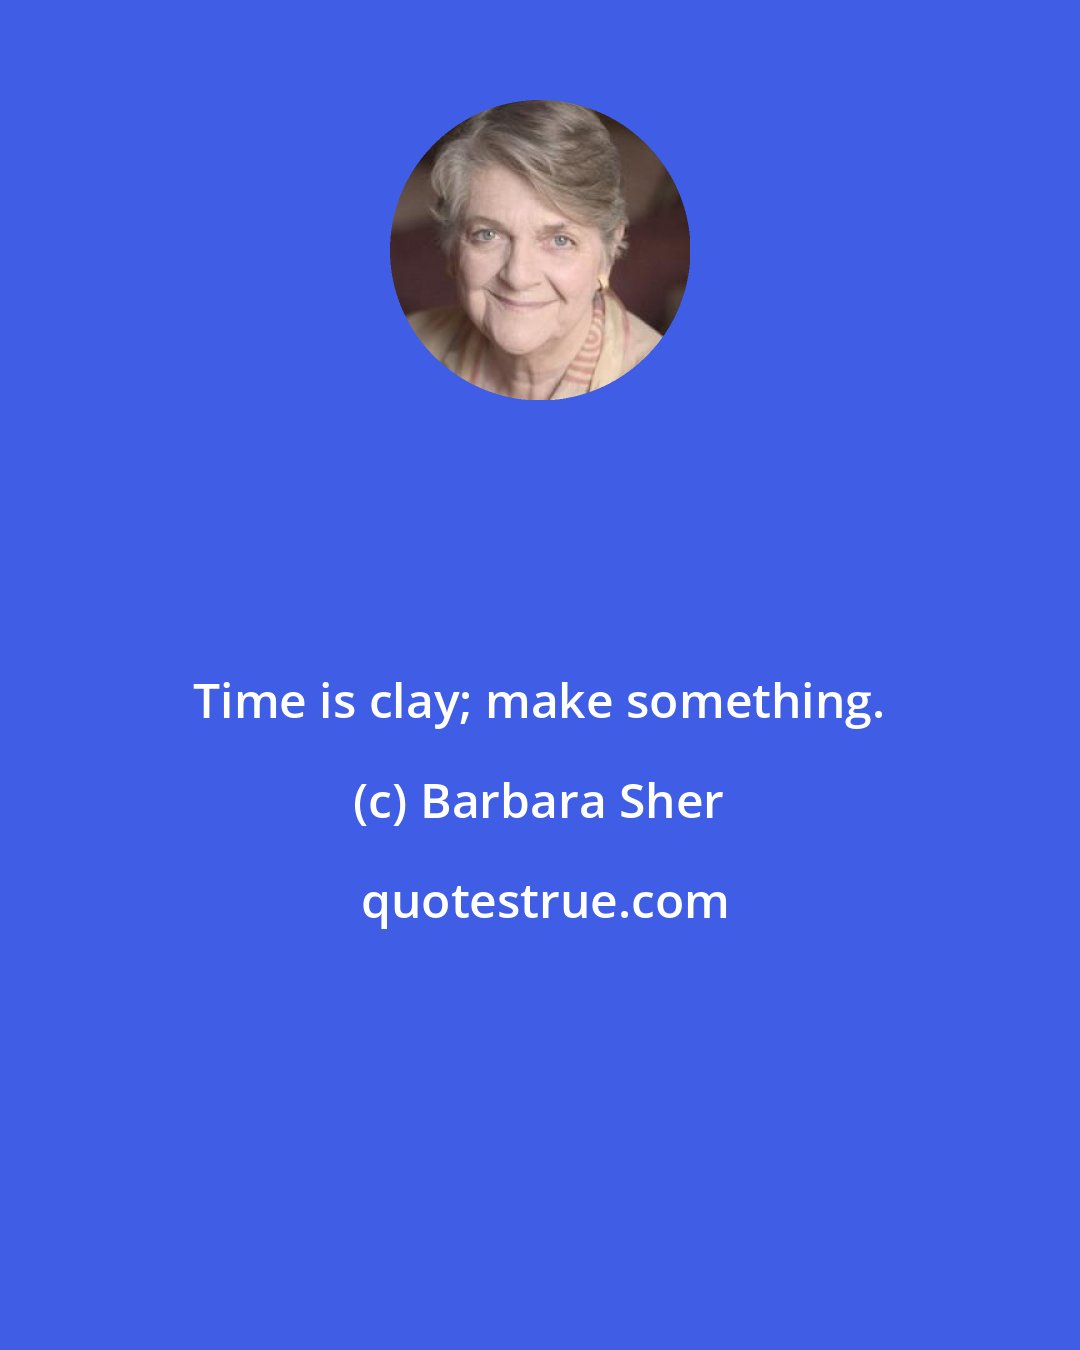 Barbara Sher: Time is clay; make something.